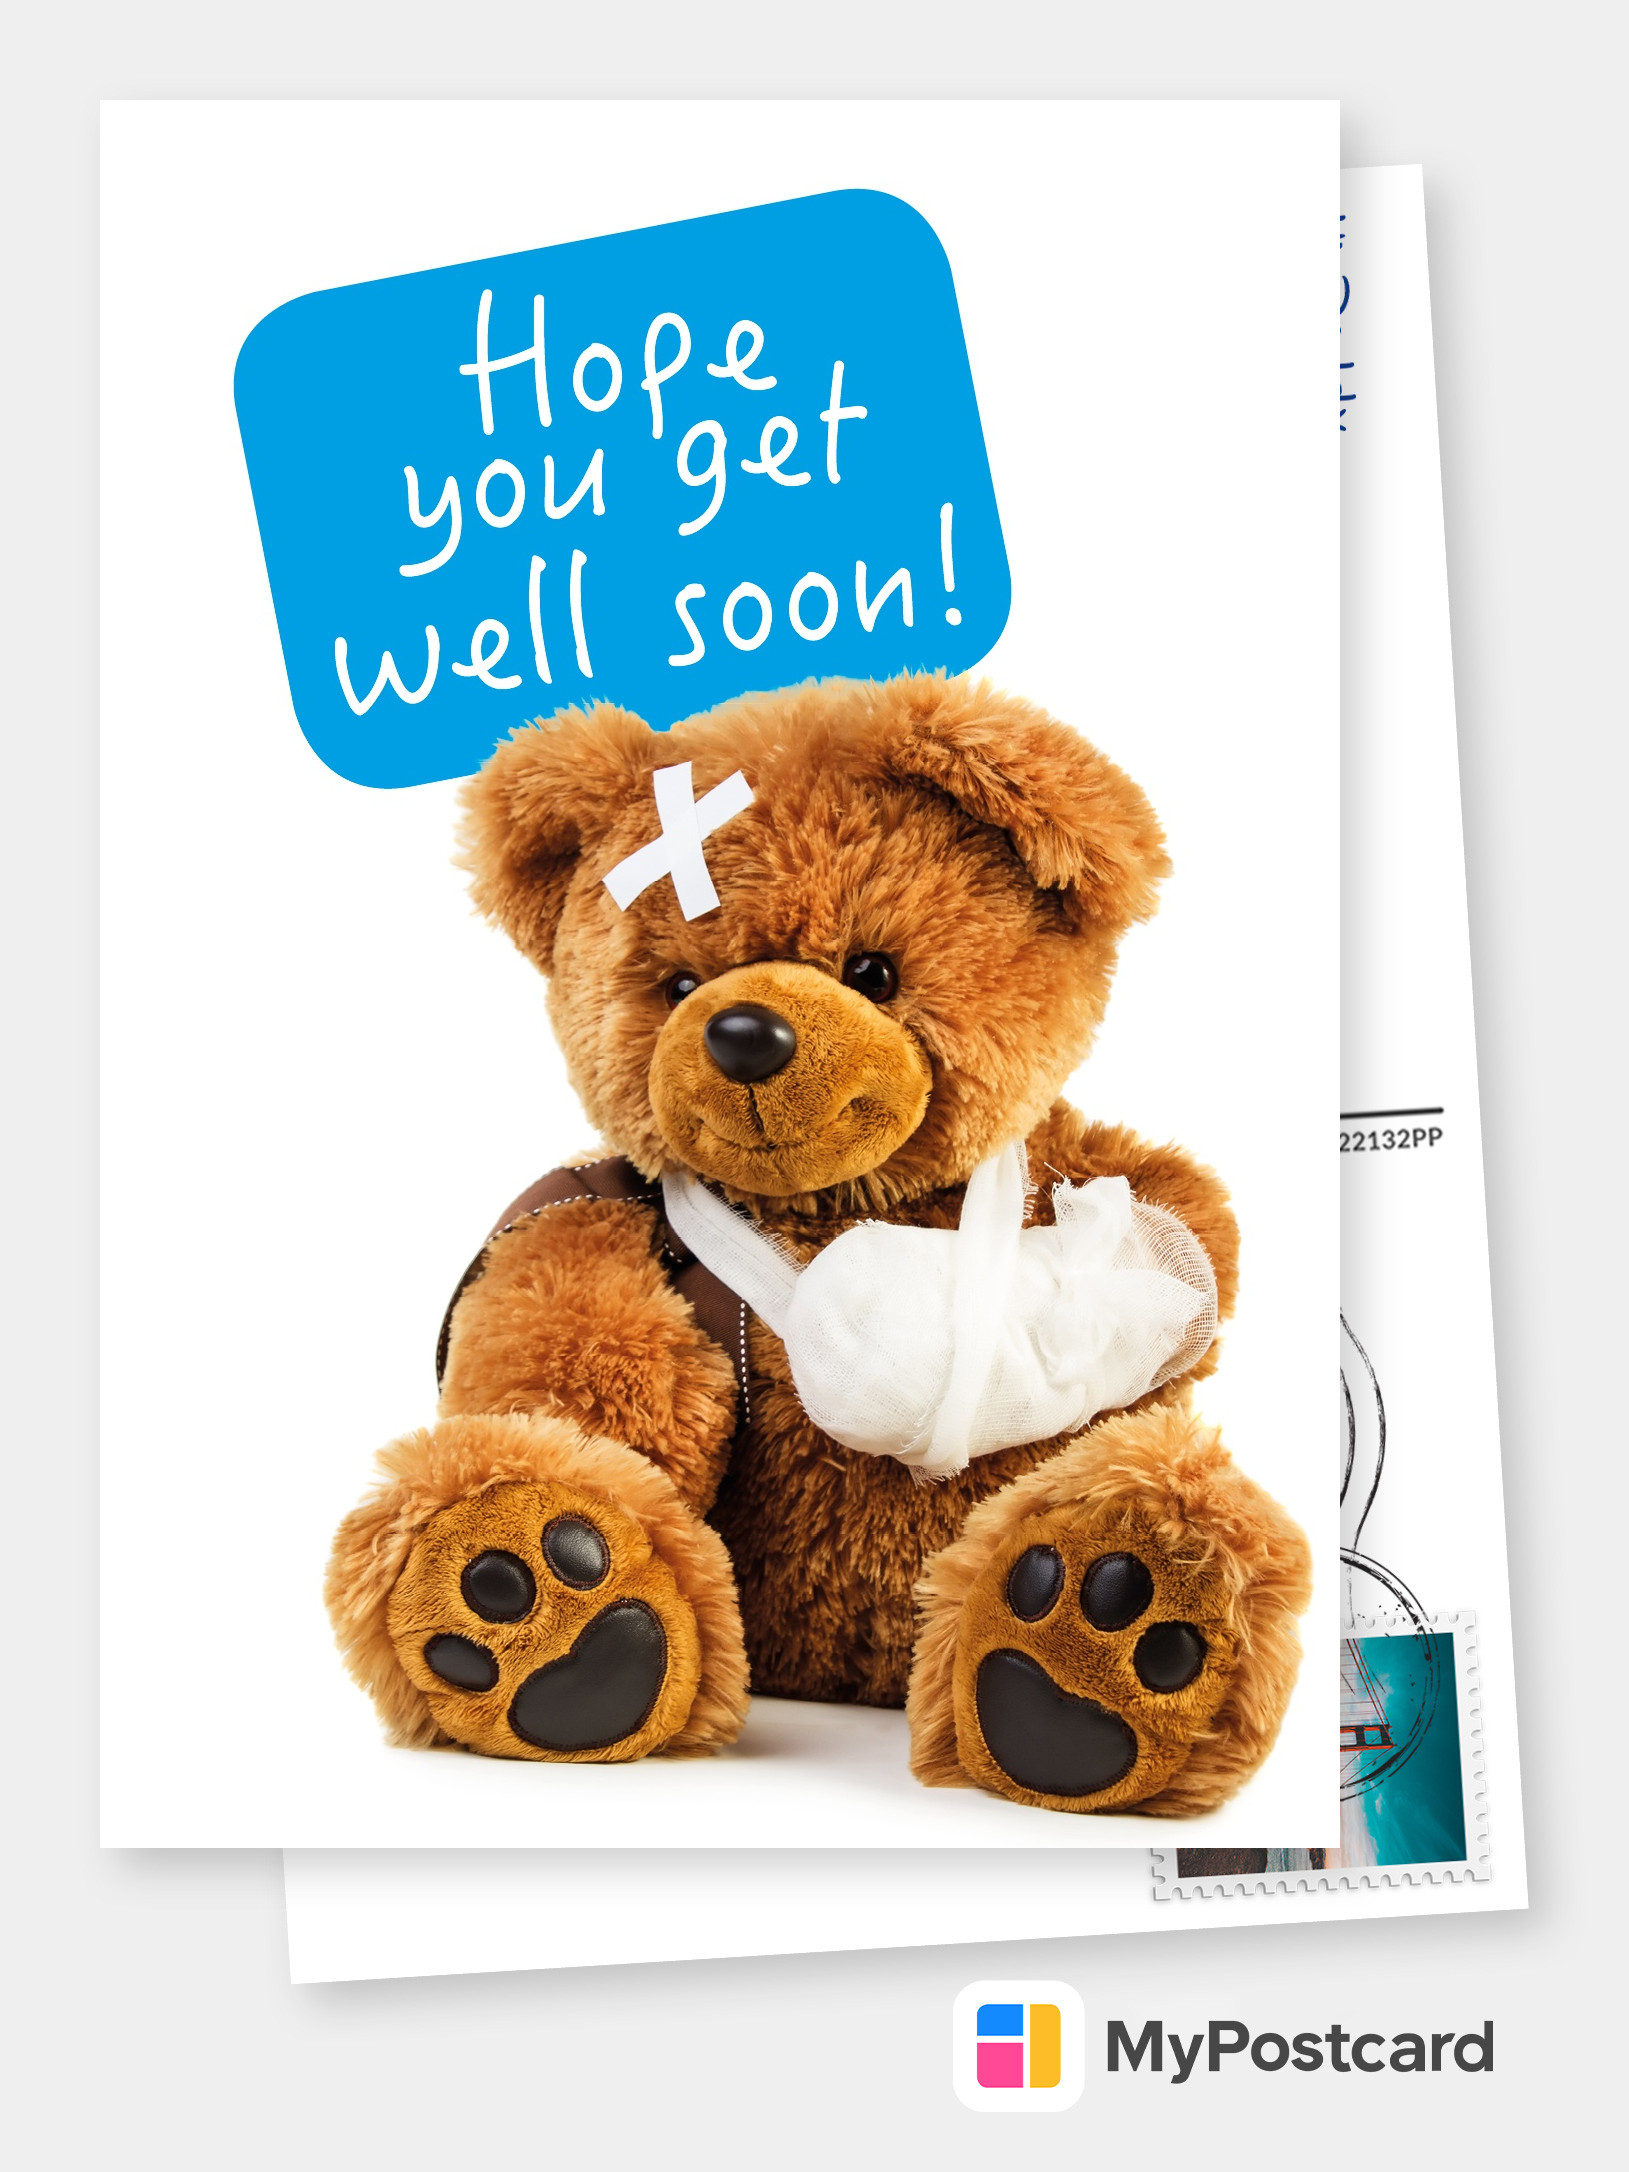 Get Well Soon Teddy Bear Ecard